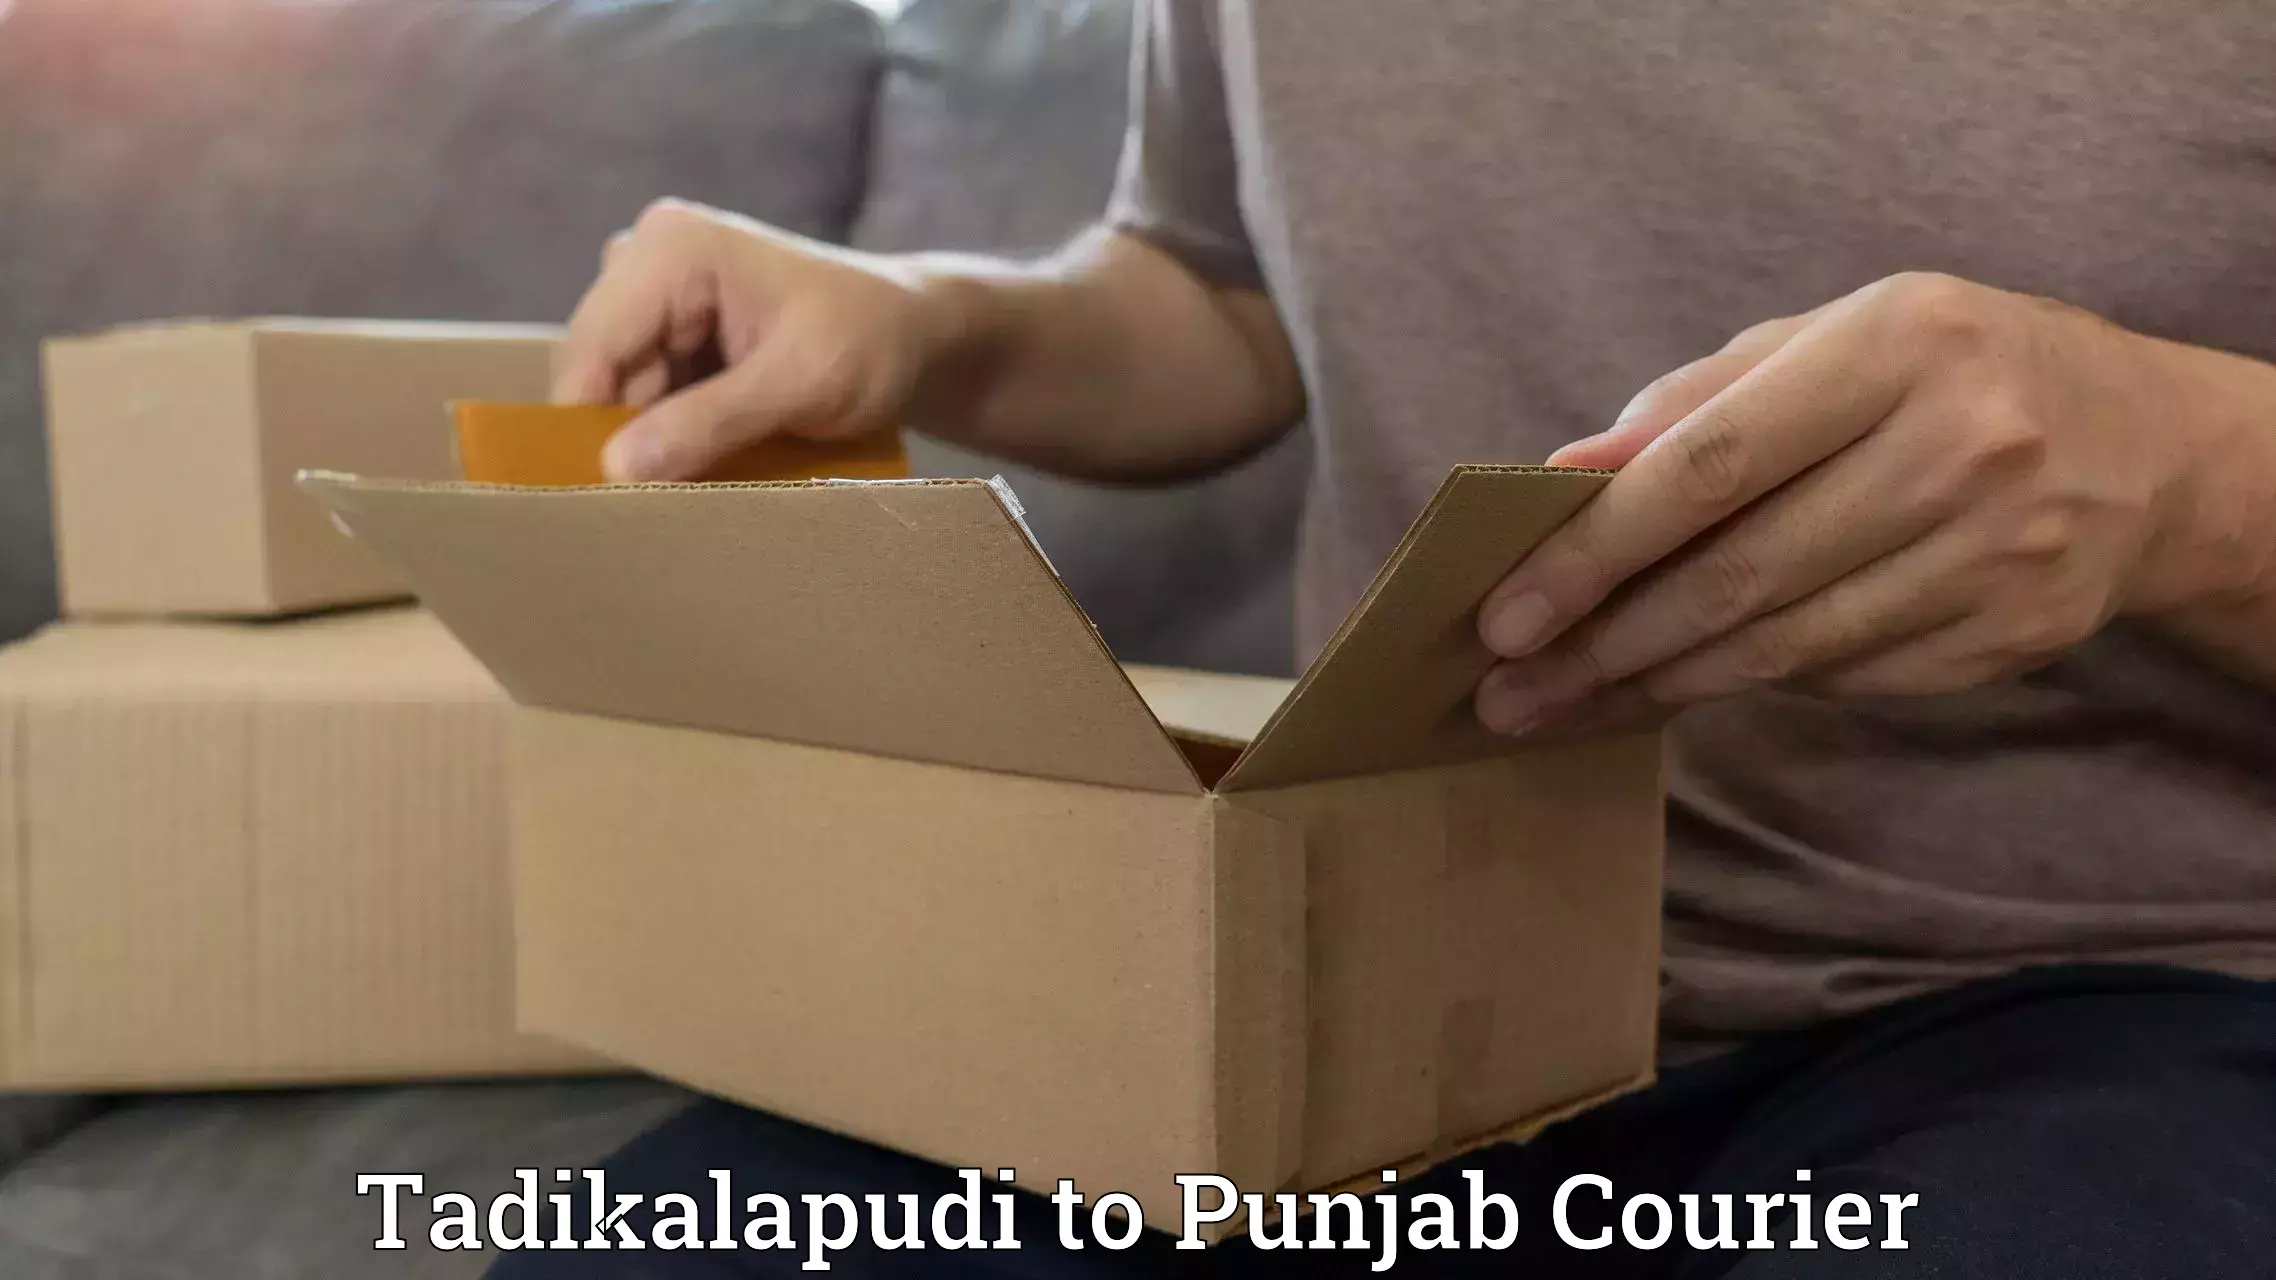 Multi-service courier options Tadikalapudi to Jalandhar